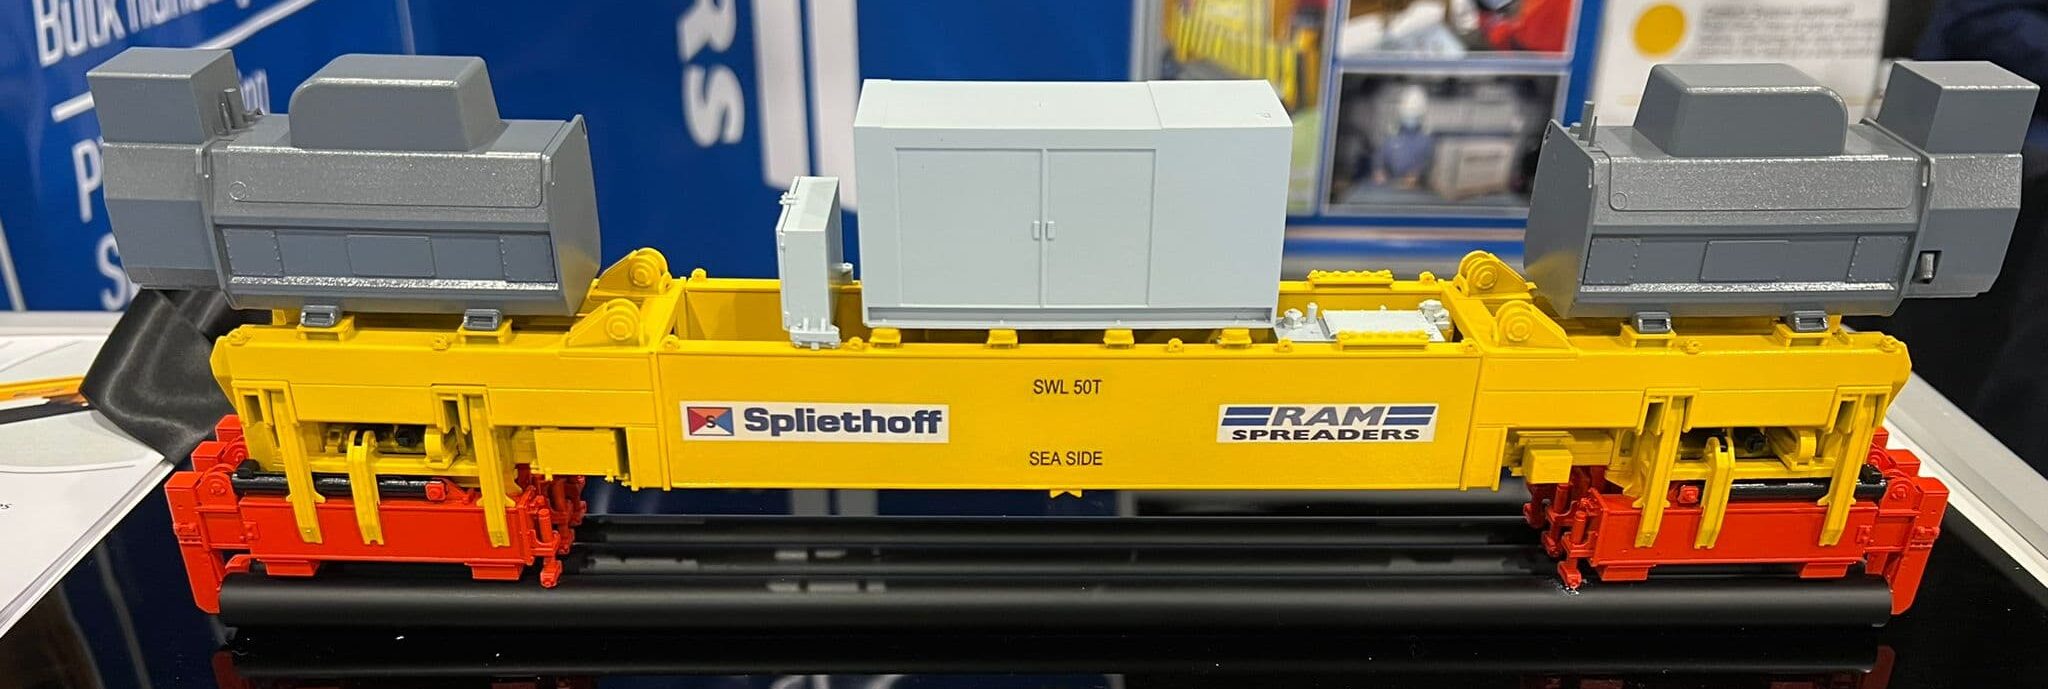 Spliethoff Receives Pipe Spreader Model (1)